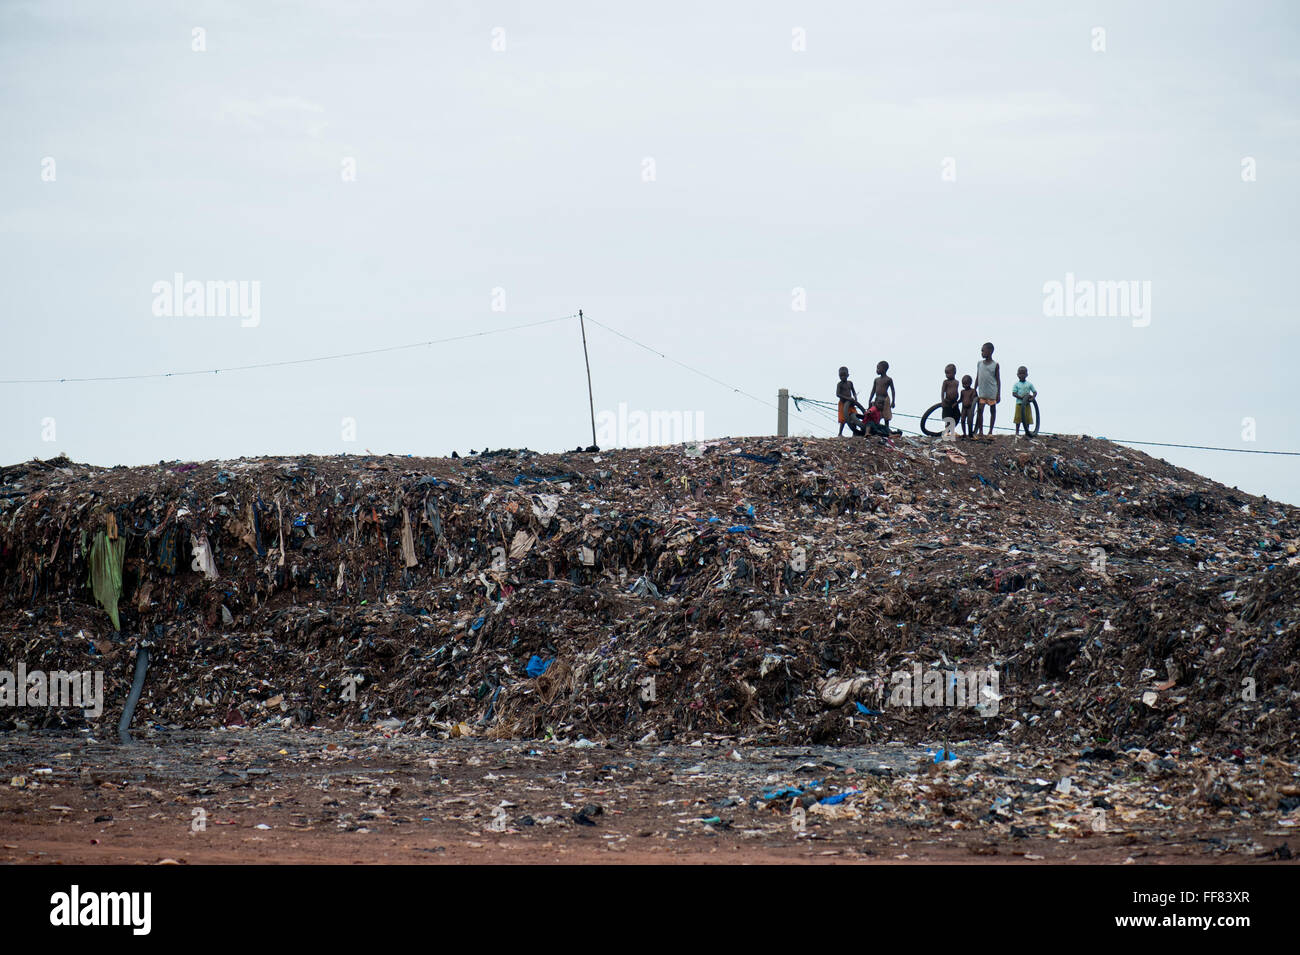 Mali, Africa - Group of black children having fun in a rubbish dump in Africa Stock Photo